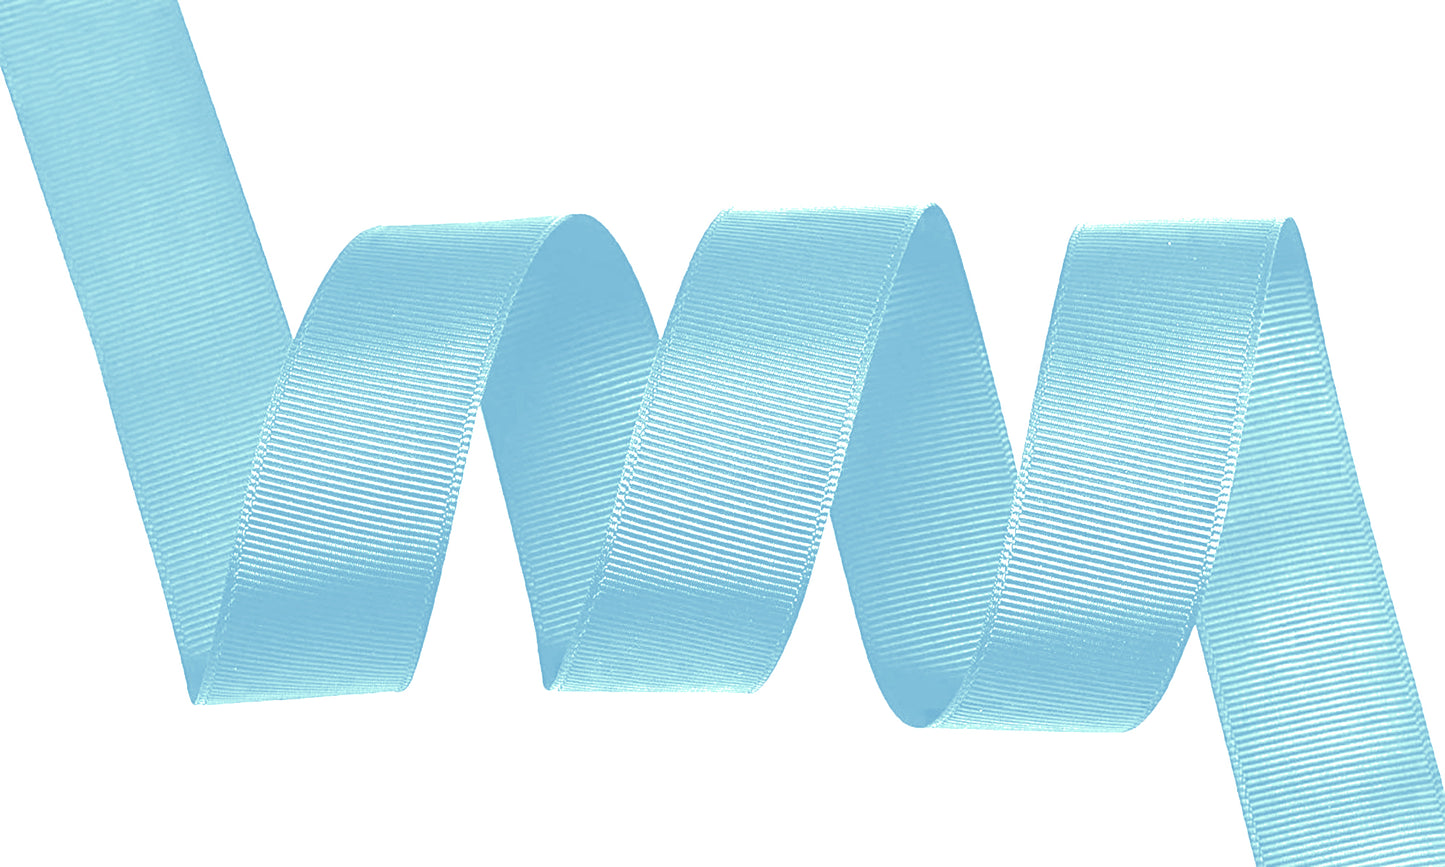 5 Yards Solid Light Blue Grosgrain Ribbon Yardage DIY Crafts Bows USA